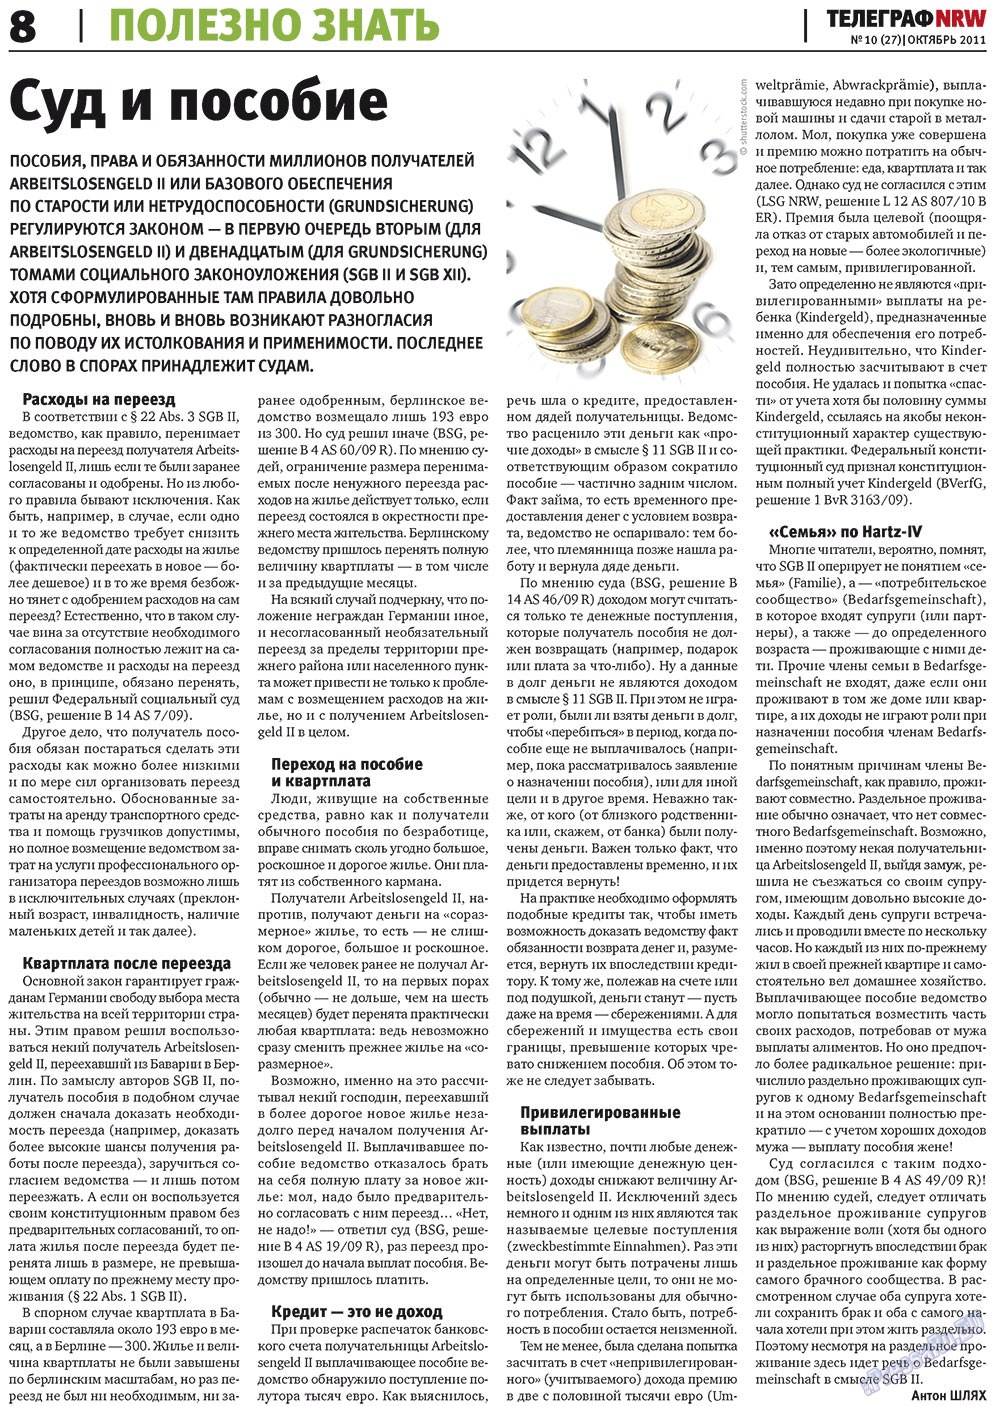 Телеграф NRW, газета. 2011 №10 стр.8